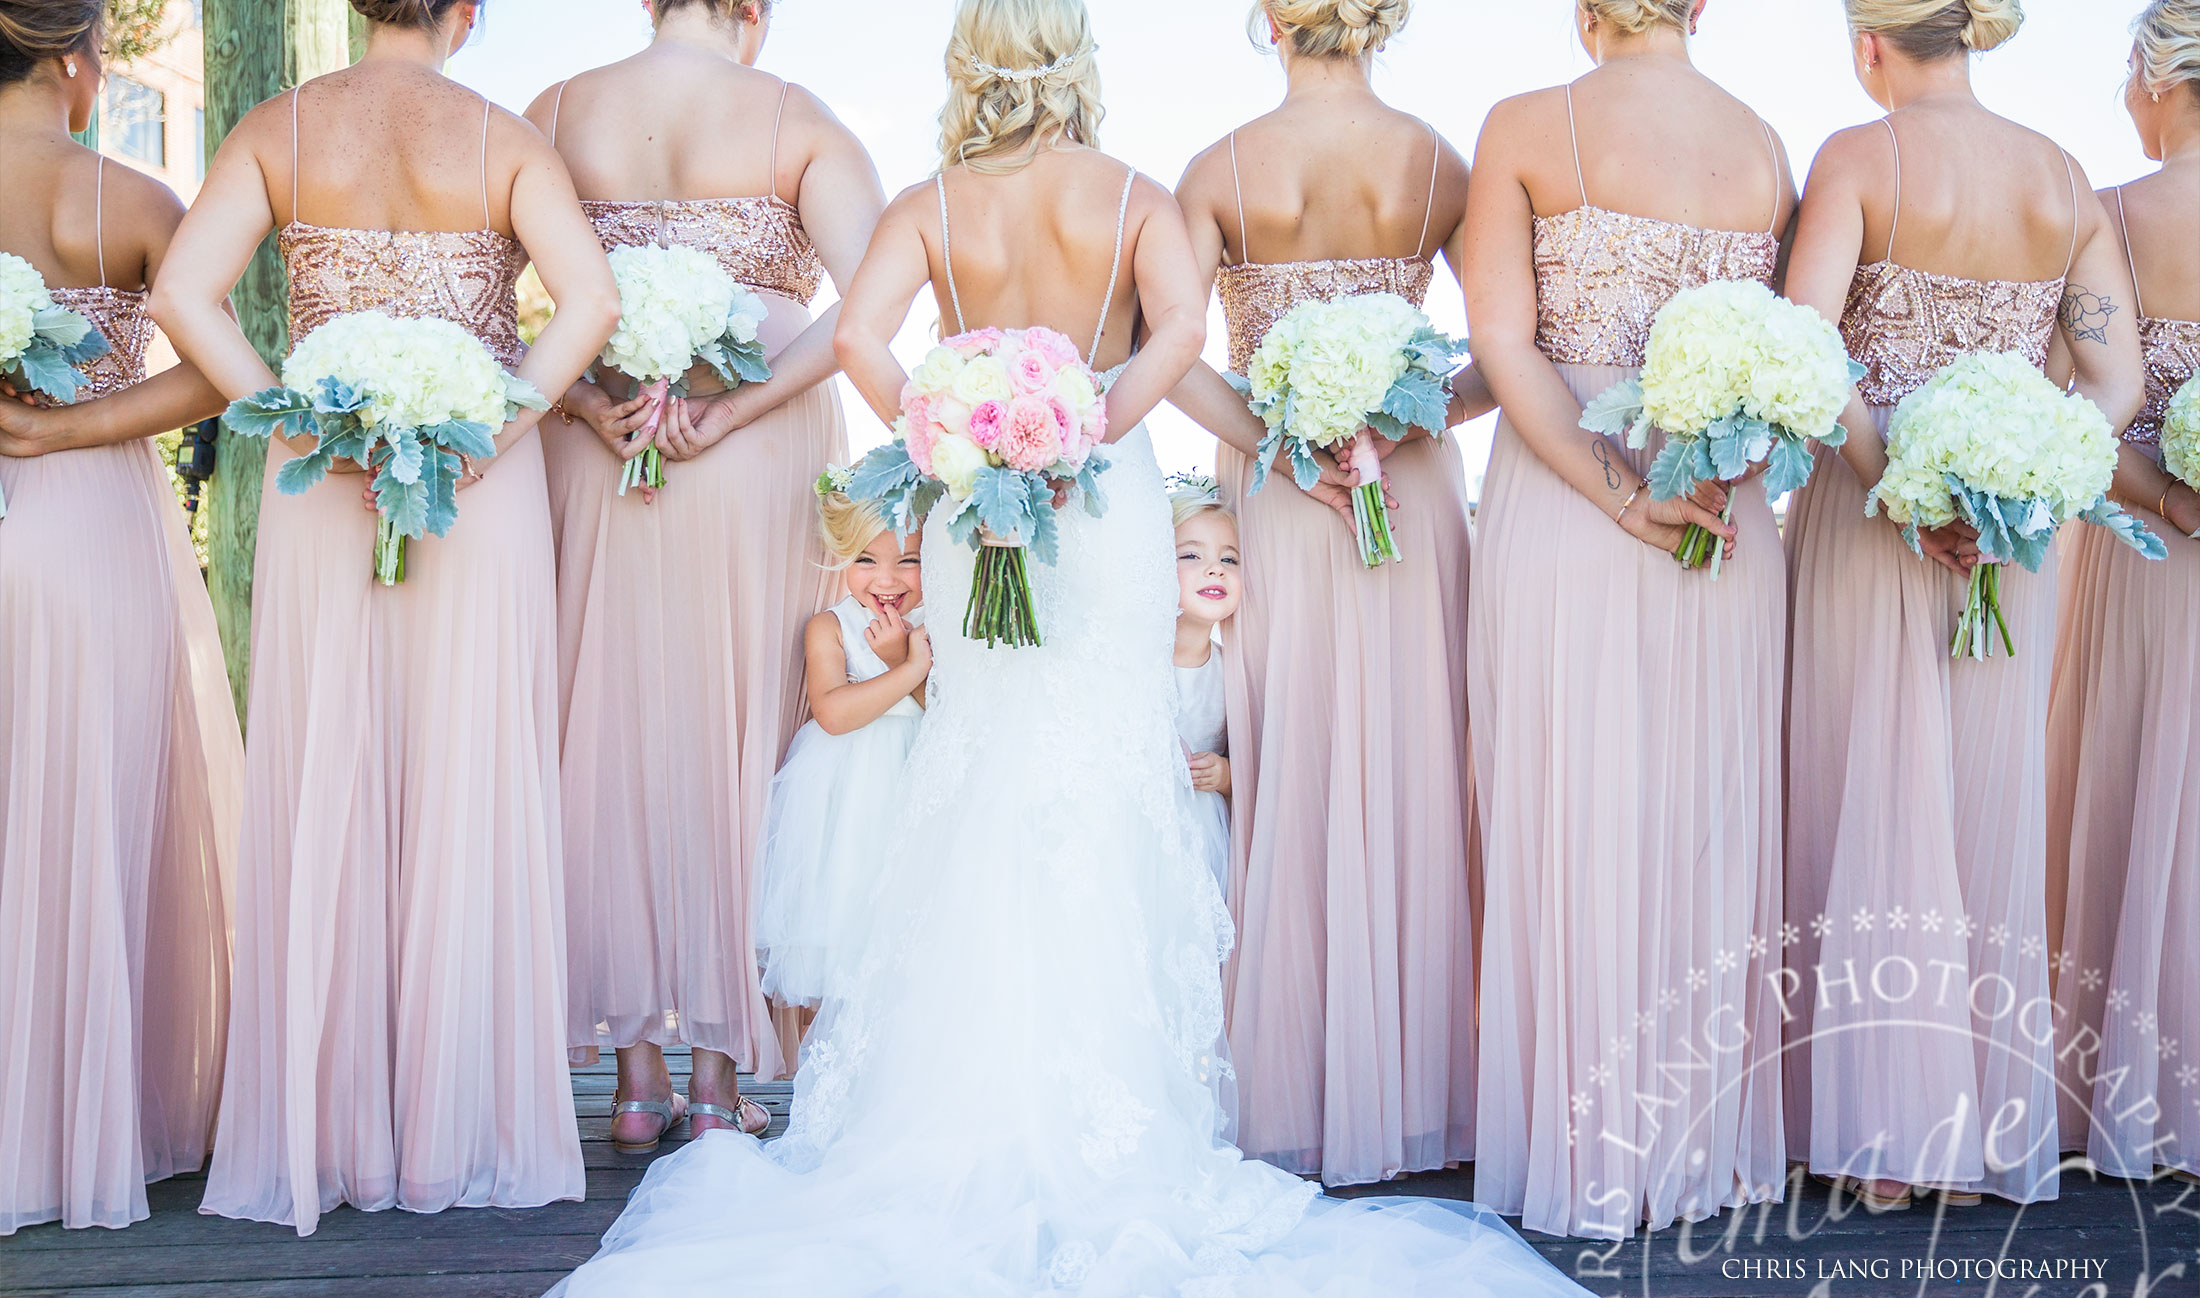 flower girls peaking behind bridsmaids - fun bridesmaid photo - bridesmaid dresses - bridal boguets - 